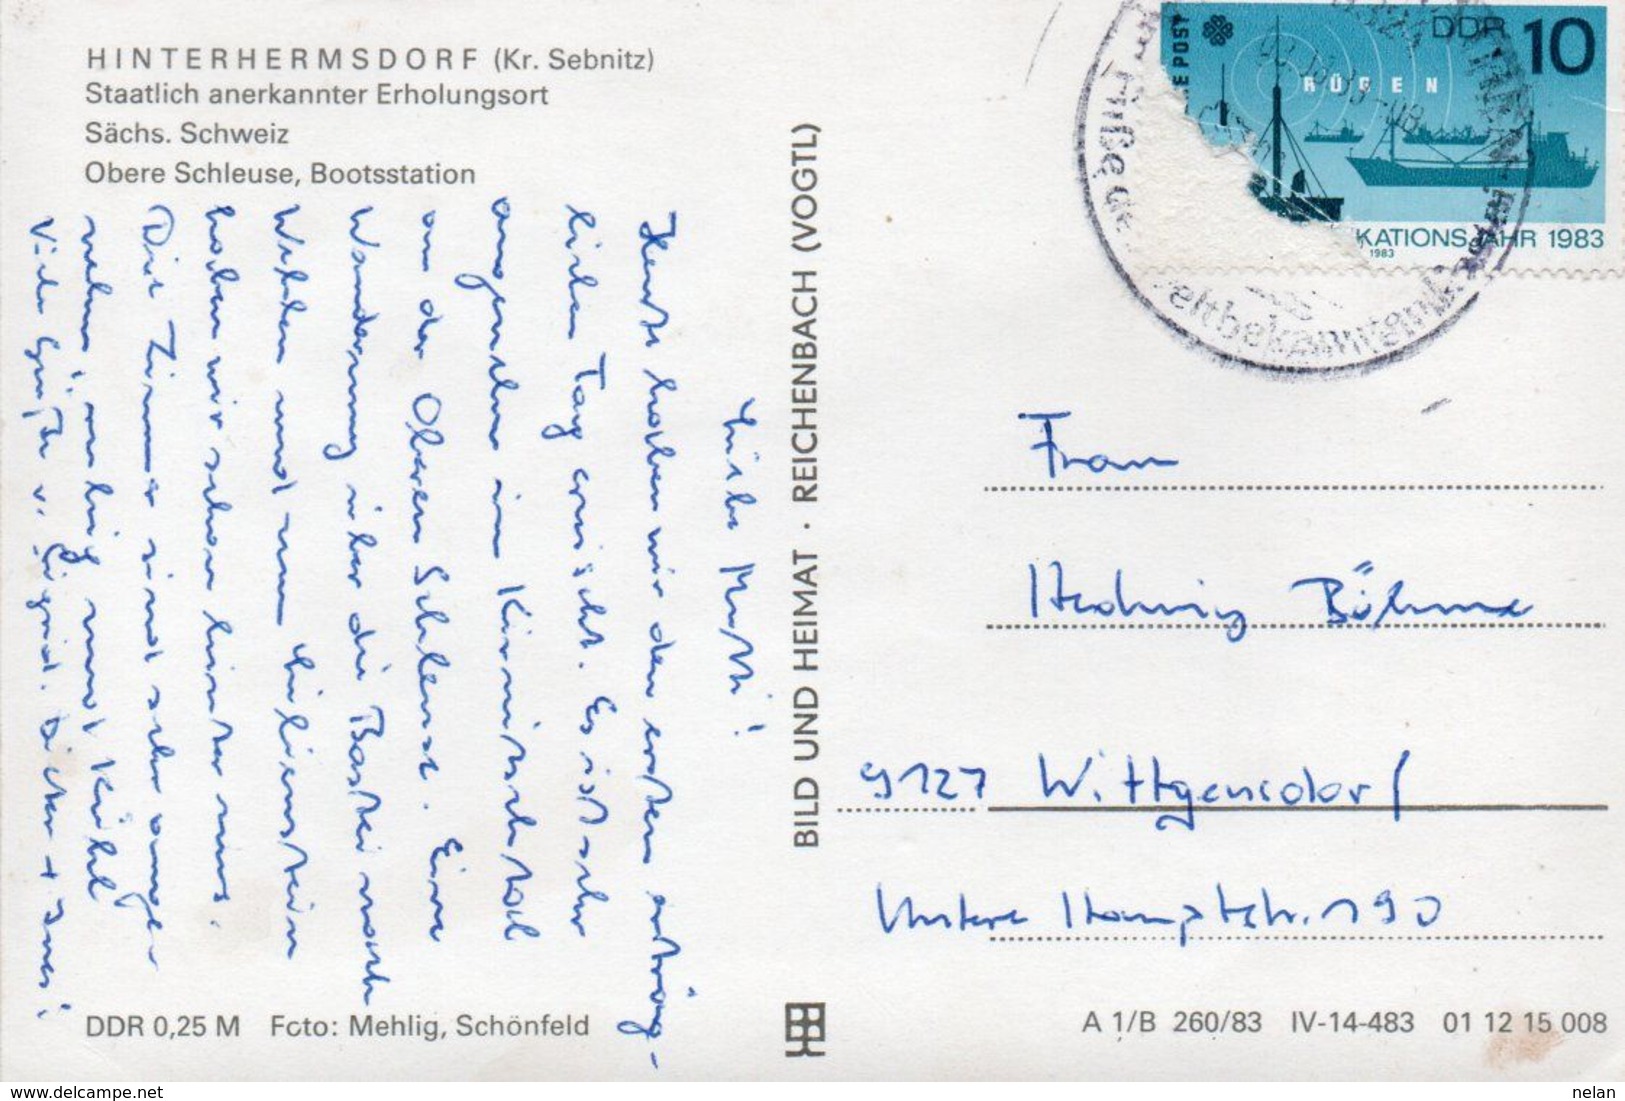 GERMANY-POST CARD-HINTERHERMSDORF (KR. SEBNITZ) - OBERE SCHLEUSE-BOOTSSTATION - Hinterhermsdorf